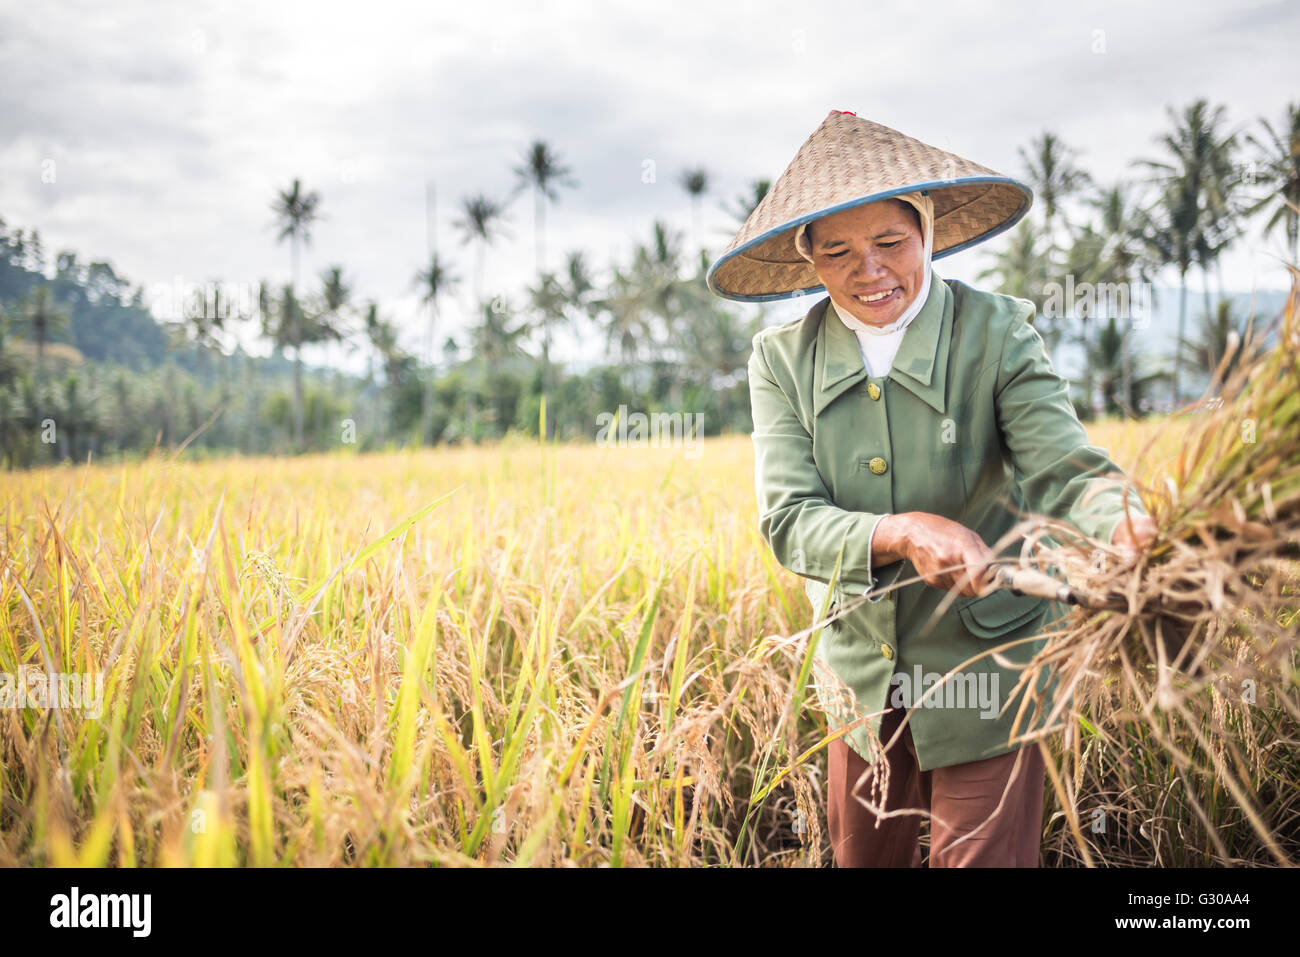 Bauern in einem Reis Reisfeld, Bukittinggi, West-Sumatra, Indonesien, Südostasien, Asien Stockfoto